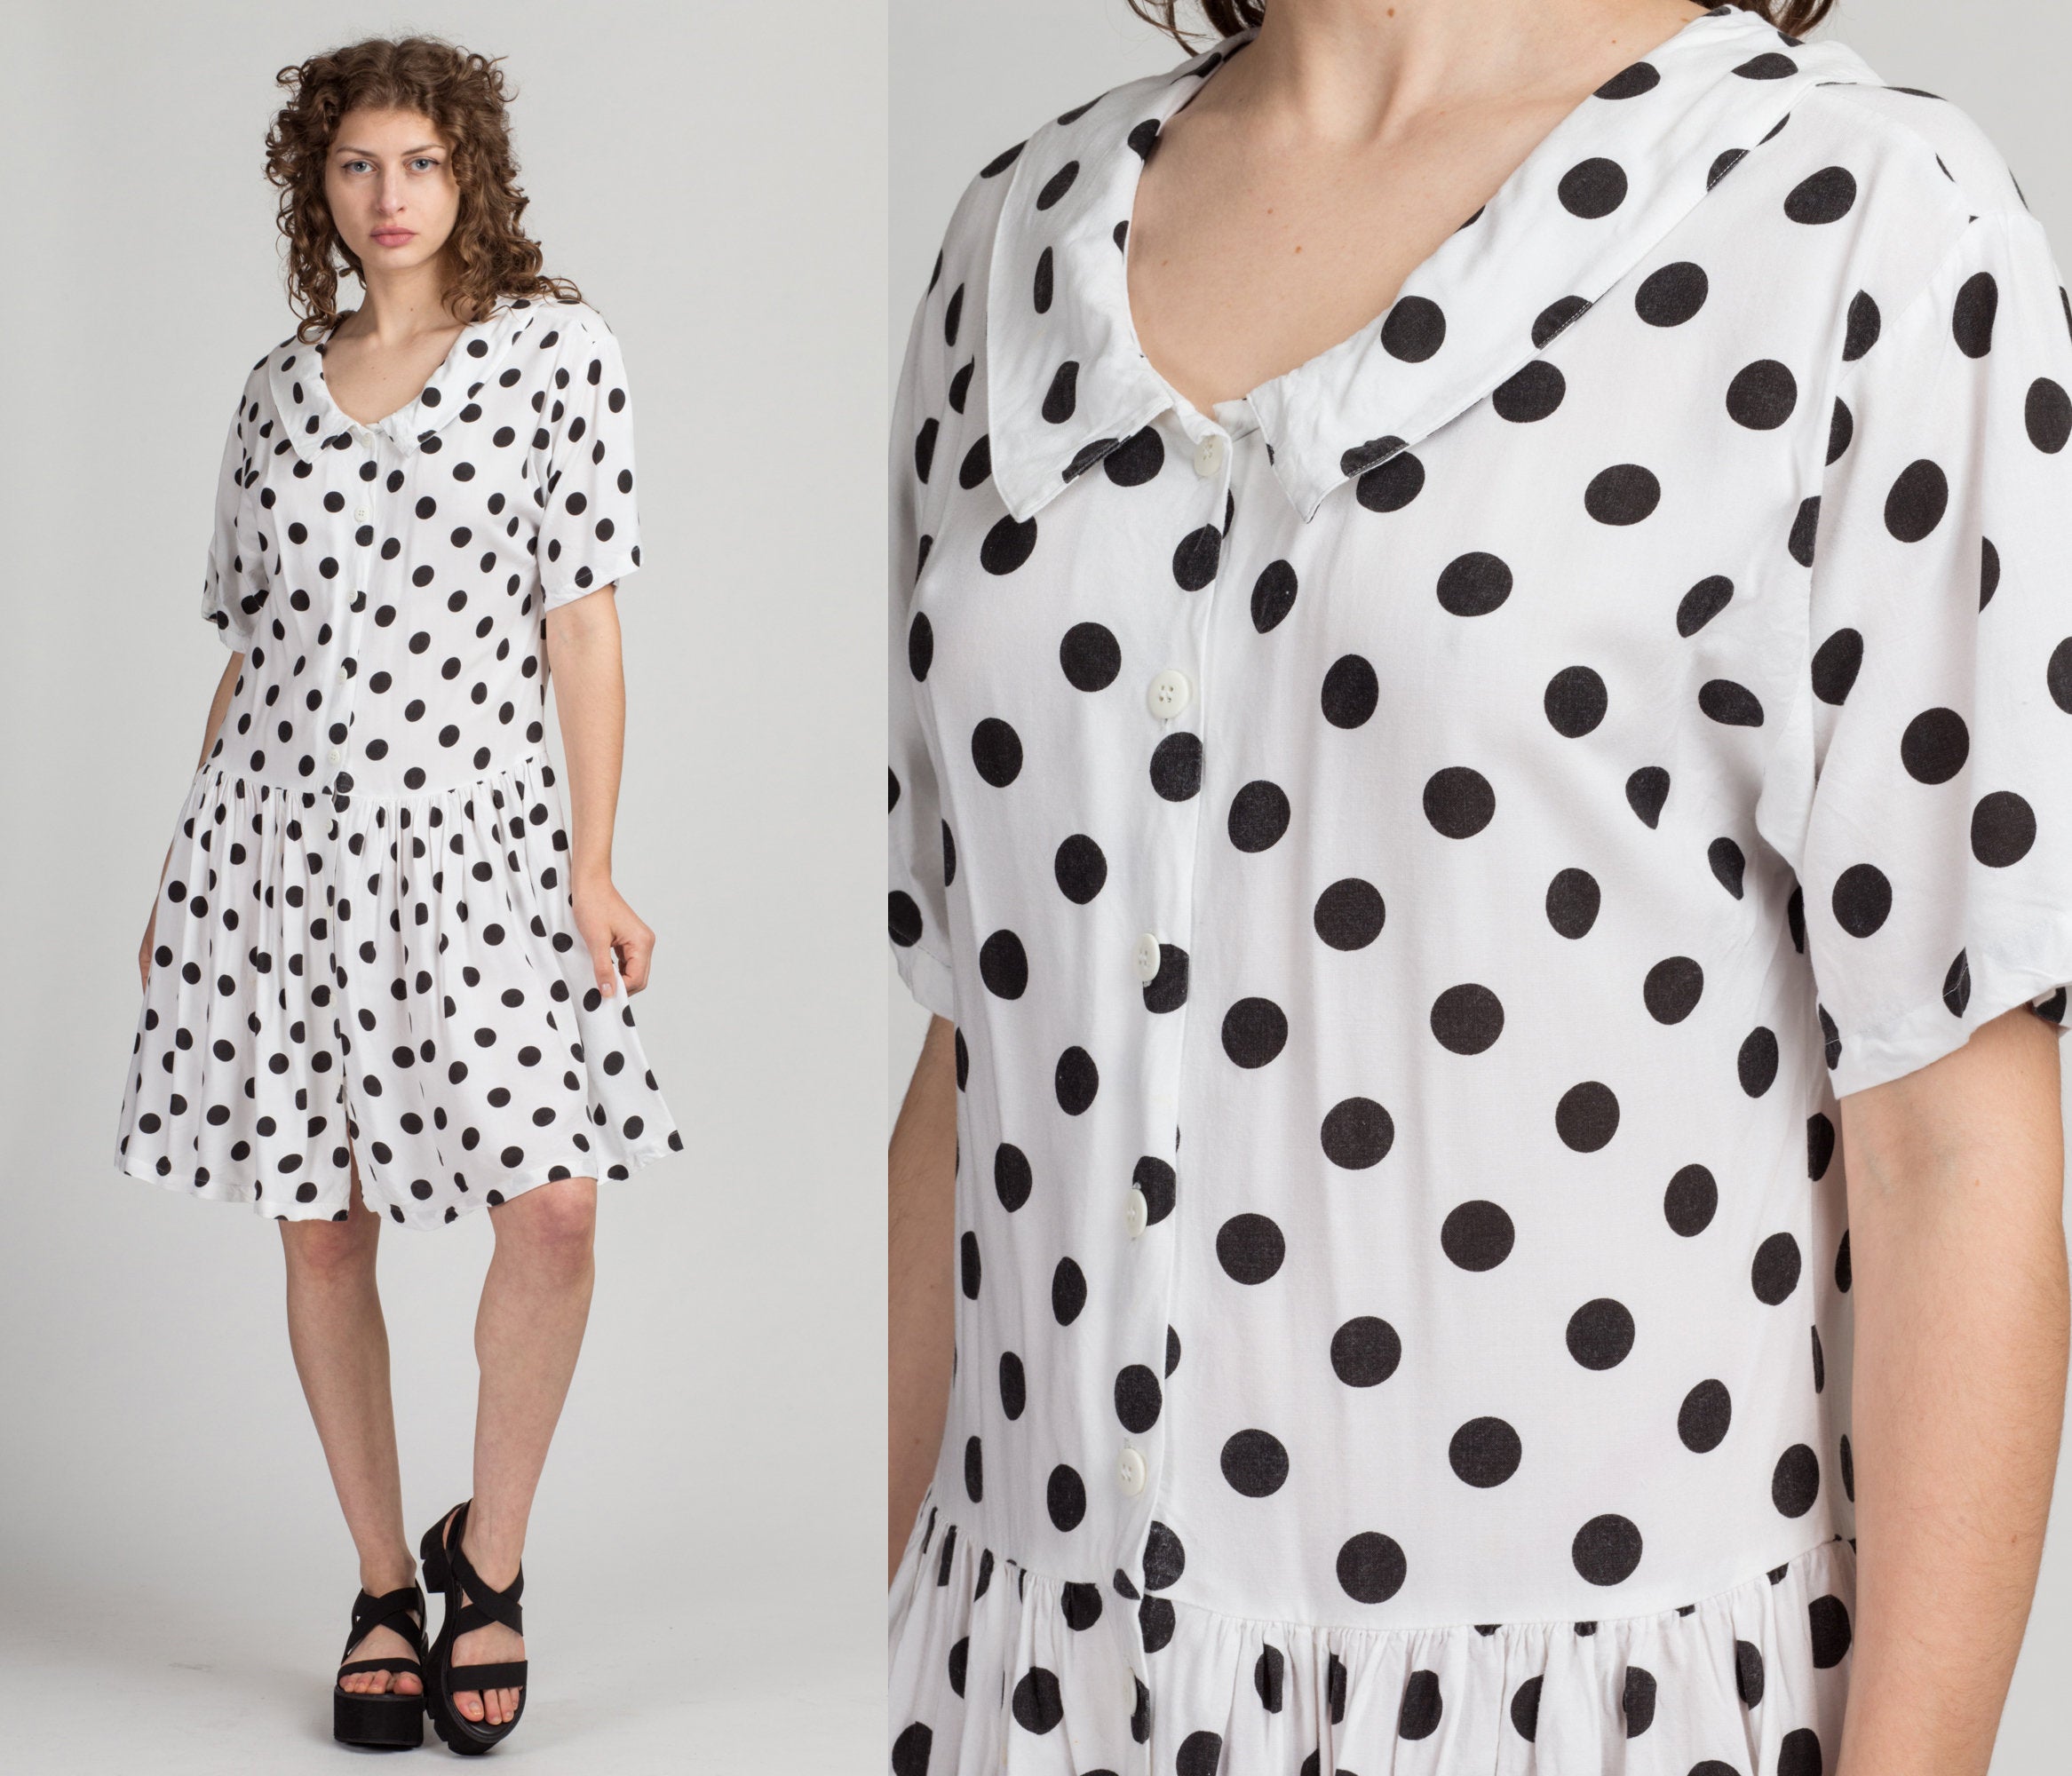 Black Polka Dot Retro Dress on White Background Stock Image - Image of  cotton, fashion: 35673897